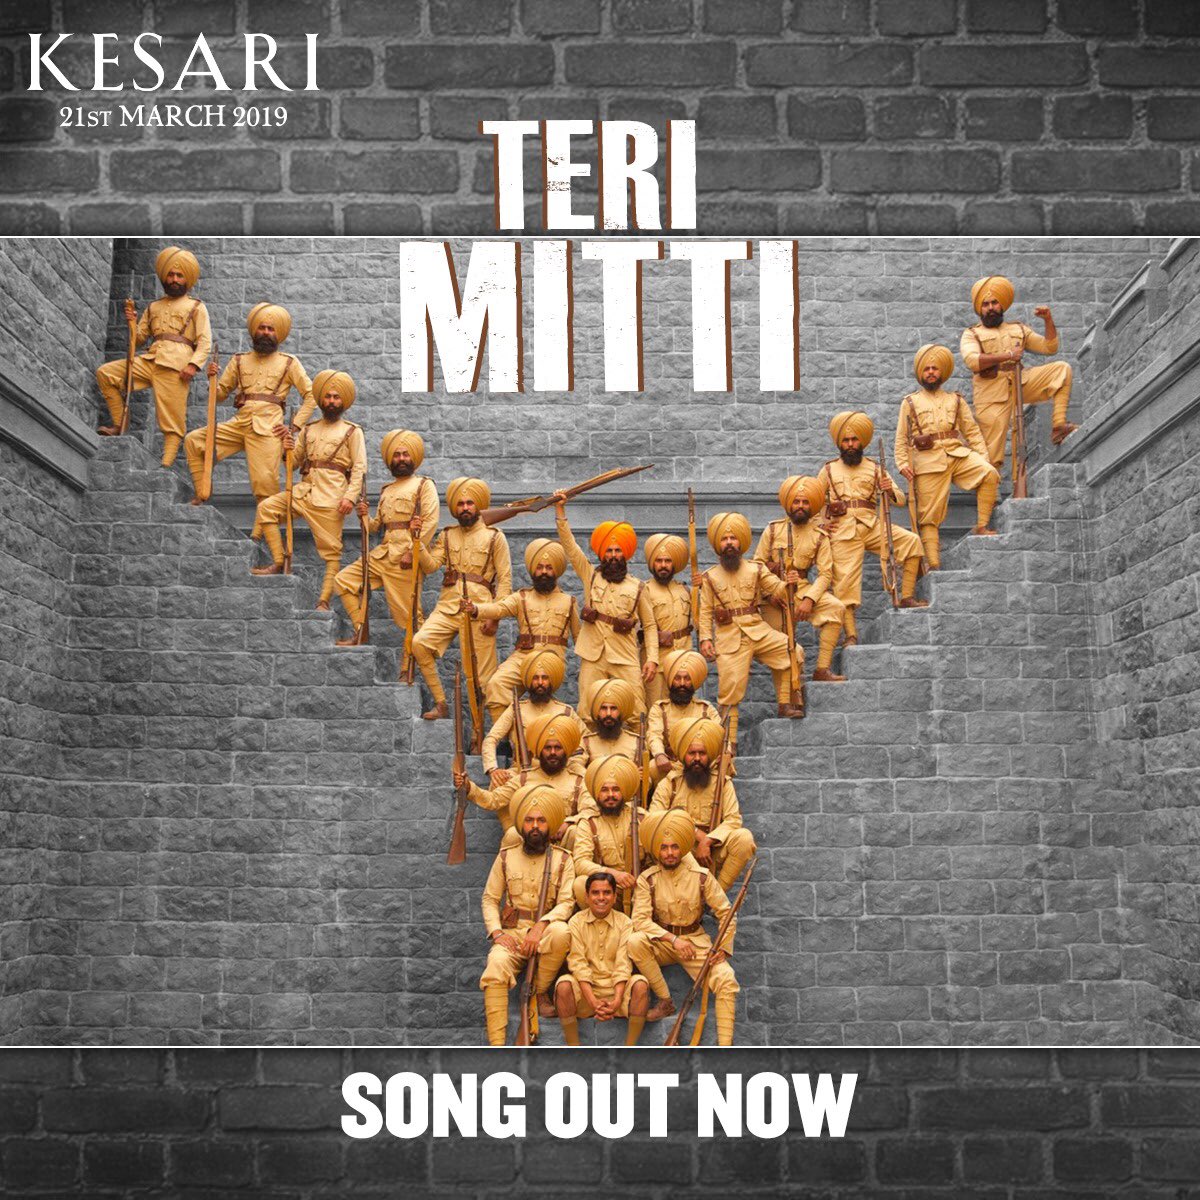 teri mitti-keshari song out now